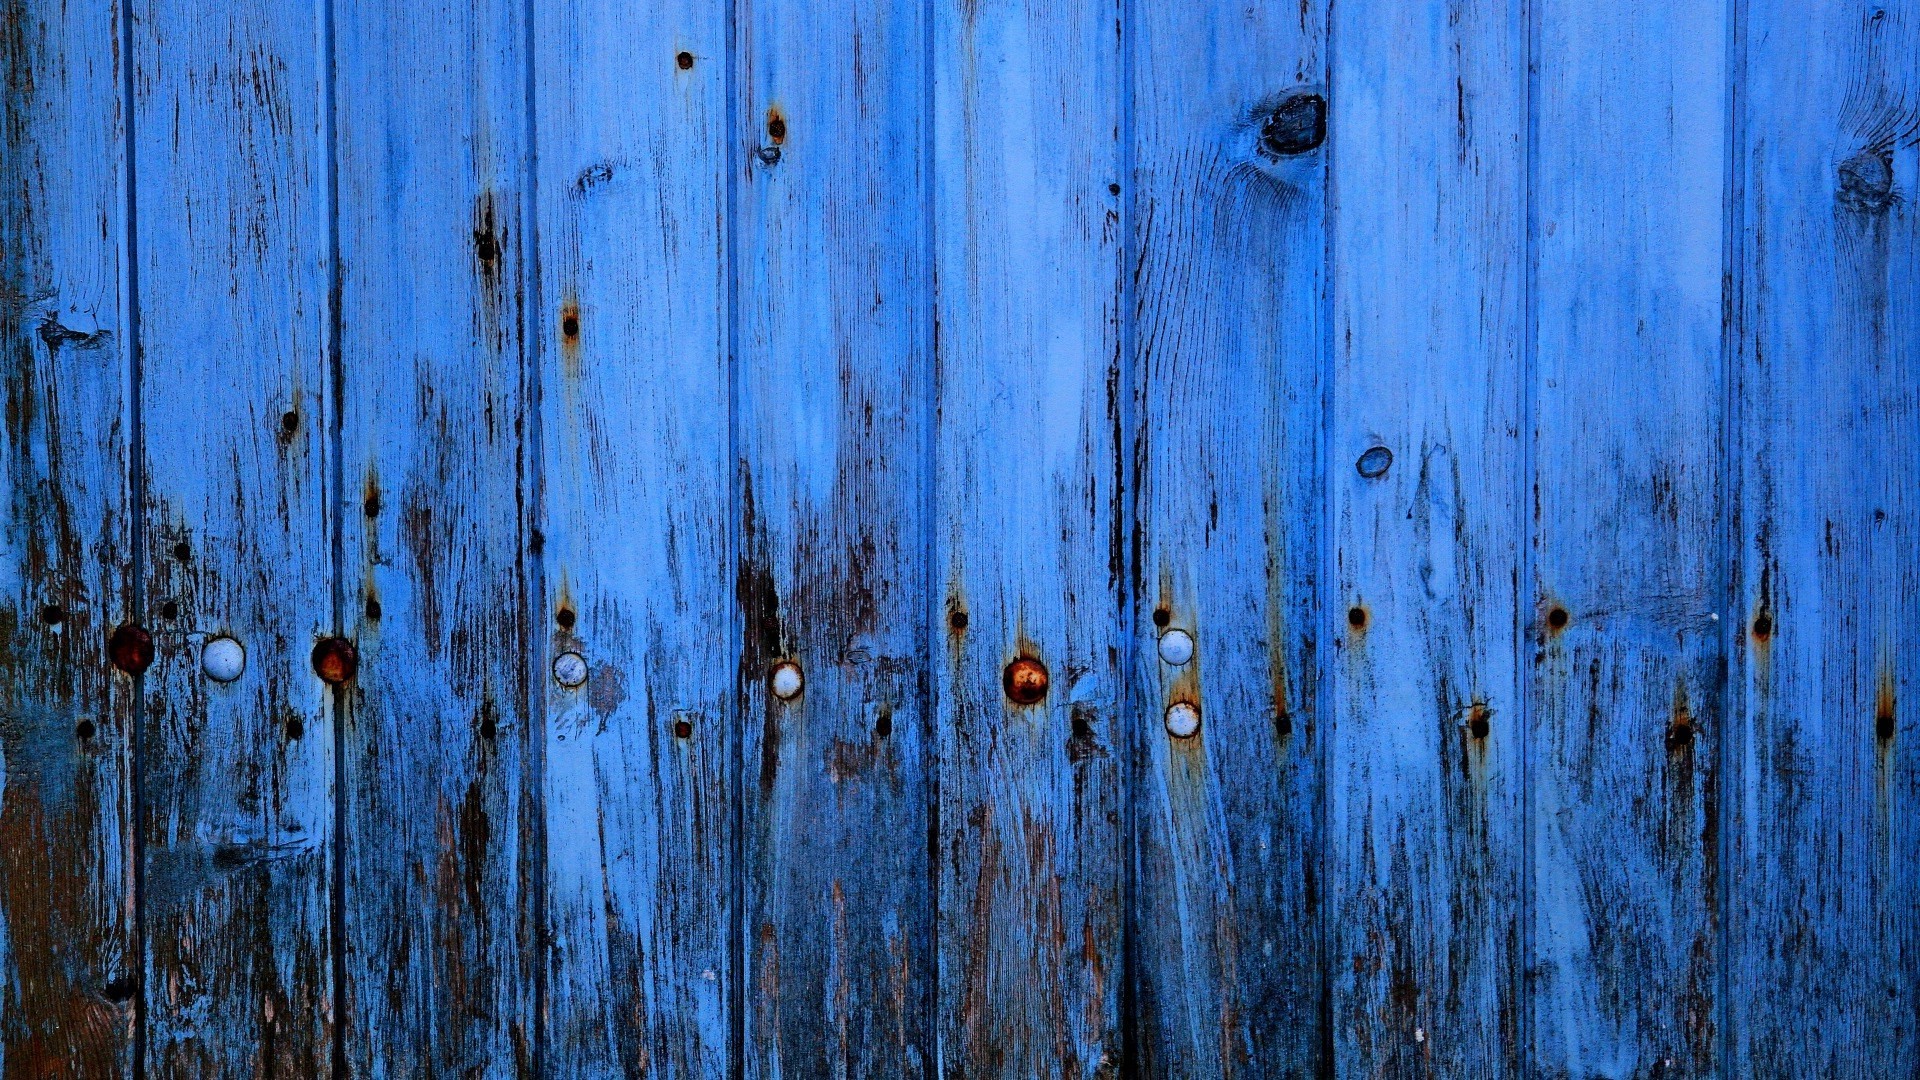 carta da parati in legno blu,blu,legna,tavola,color legno,linea